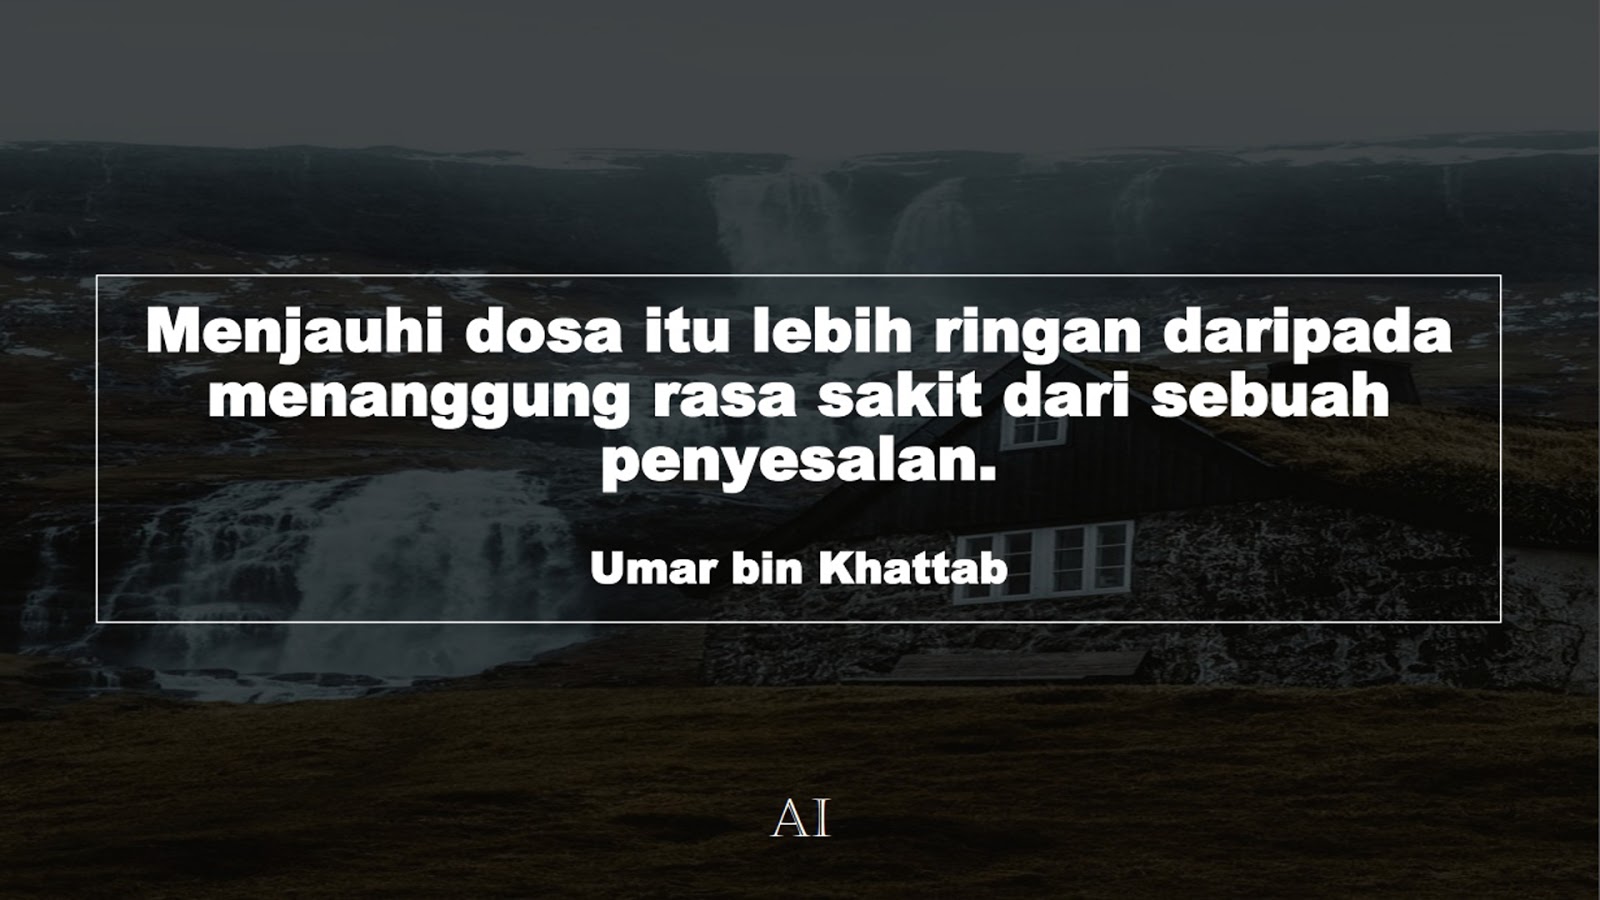 Wallpaper Kata Bijak Umar bin Khattab  (Menjauhi dosa itu lebih ringan daripada menanggung rasa sakit dari sebuah penyesalan.)